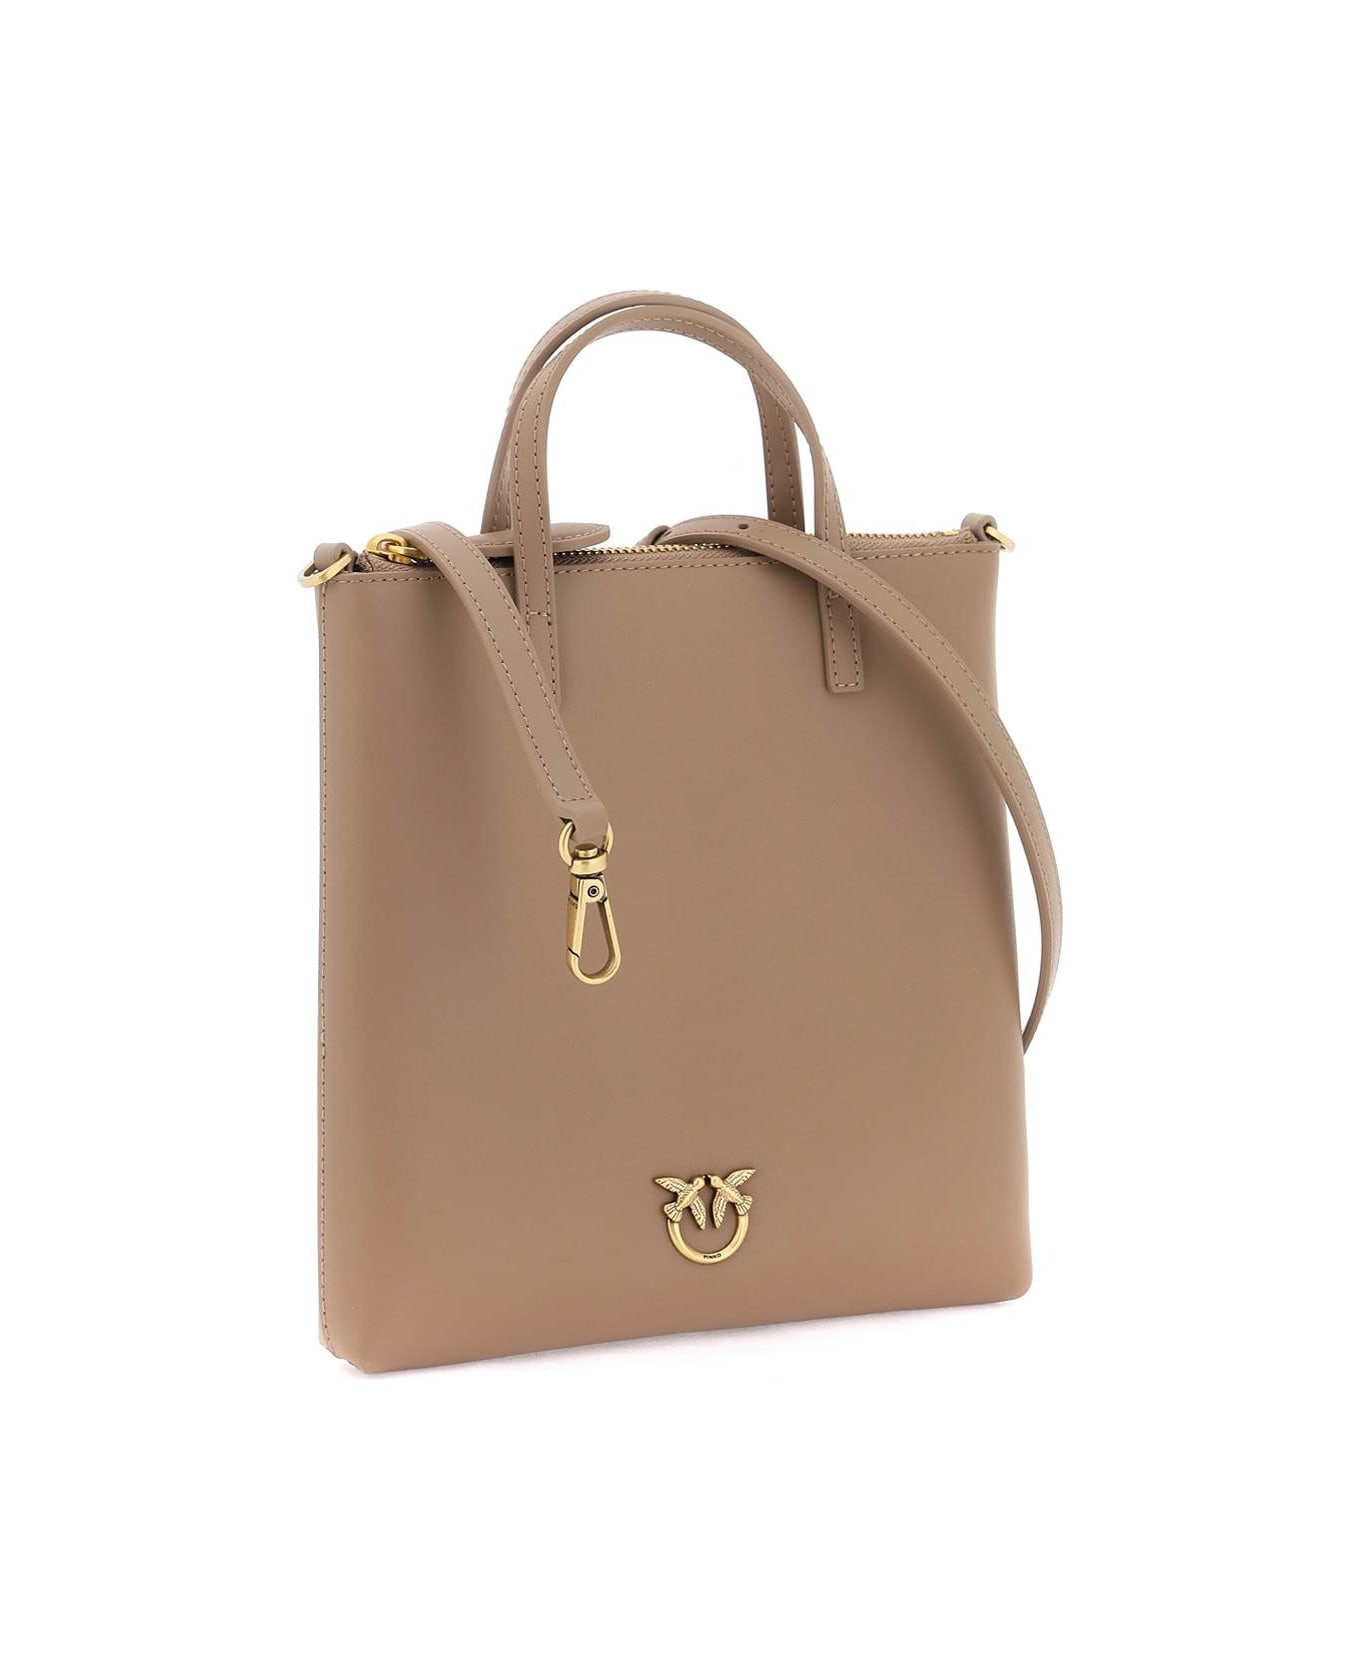 Pinko Leather Mini Tote Bag - BISCOTTO ZENZERO ANTIQUE GOLD (Brown) トートバッグ